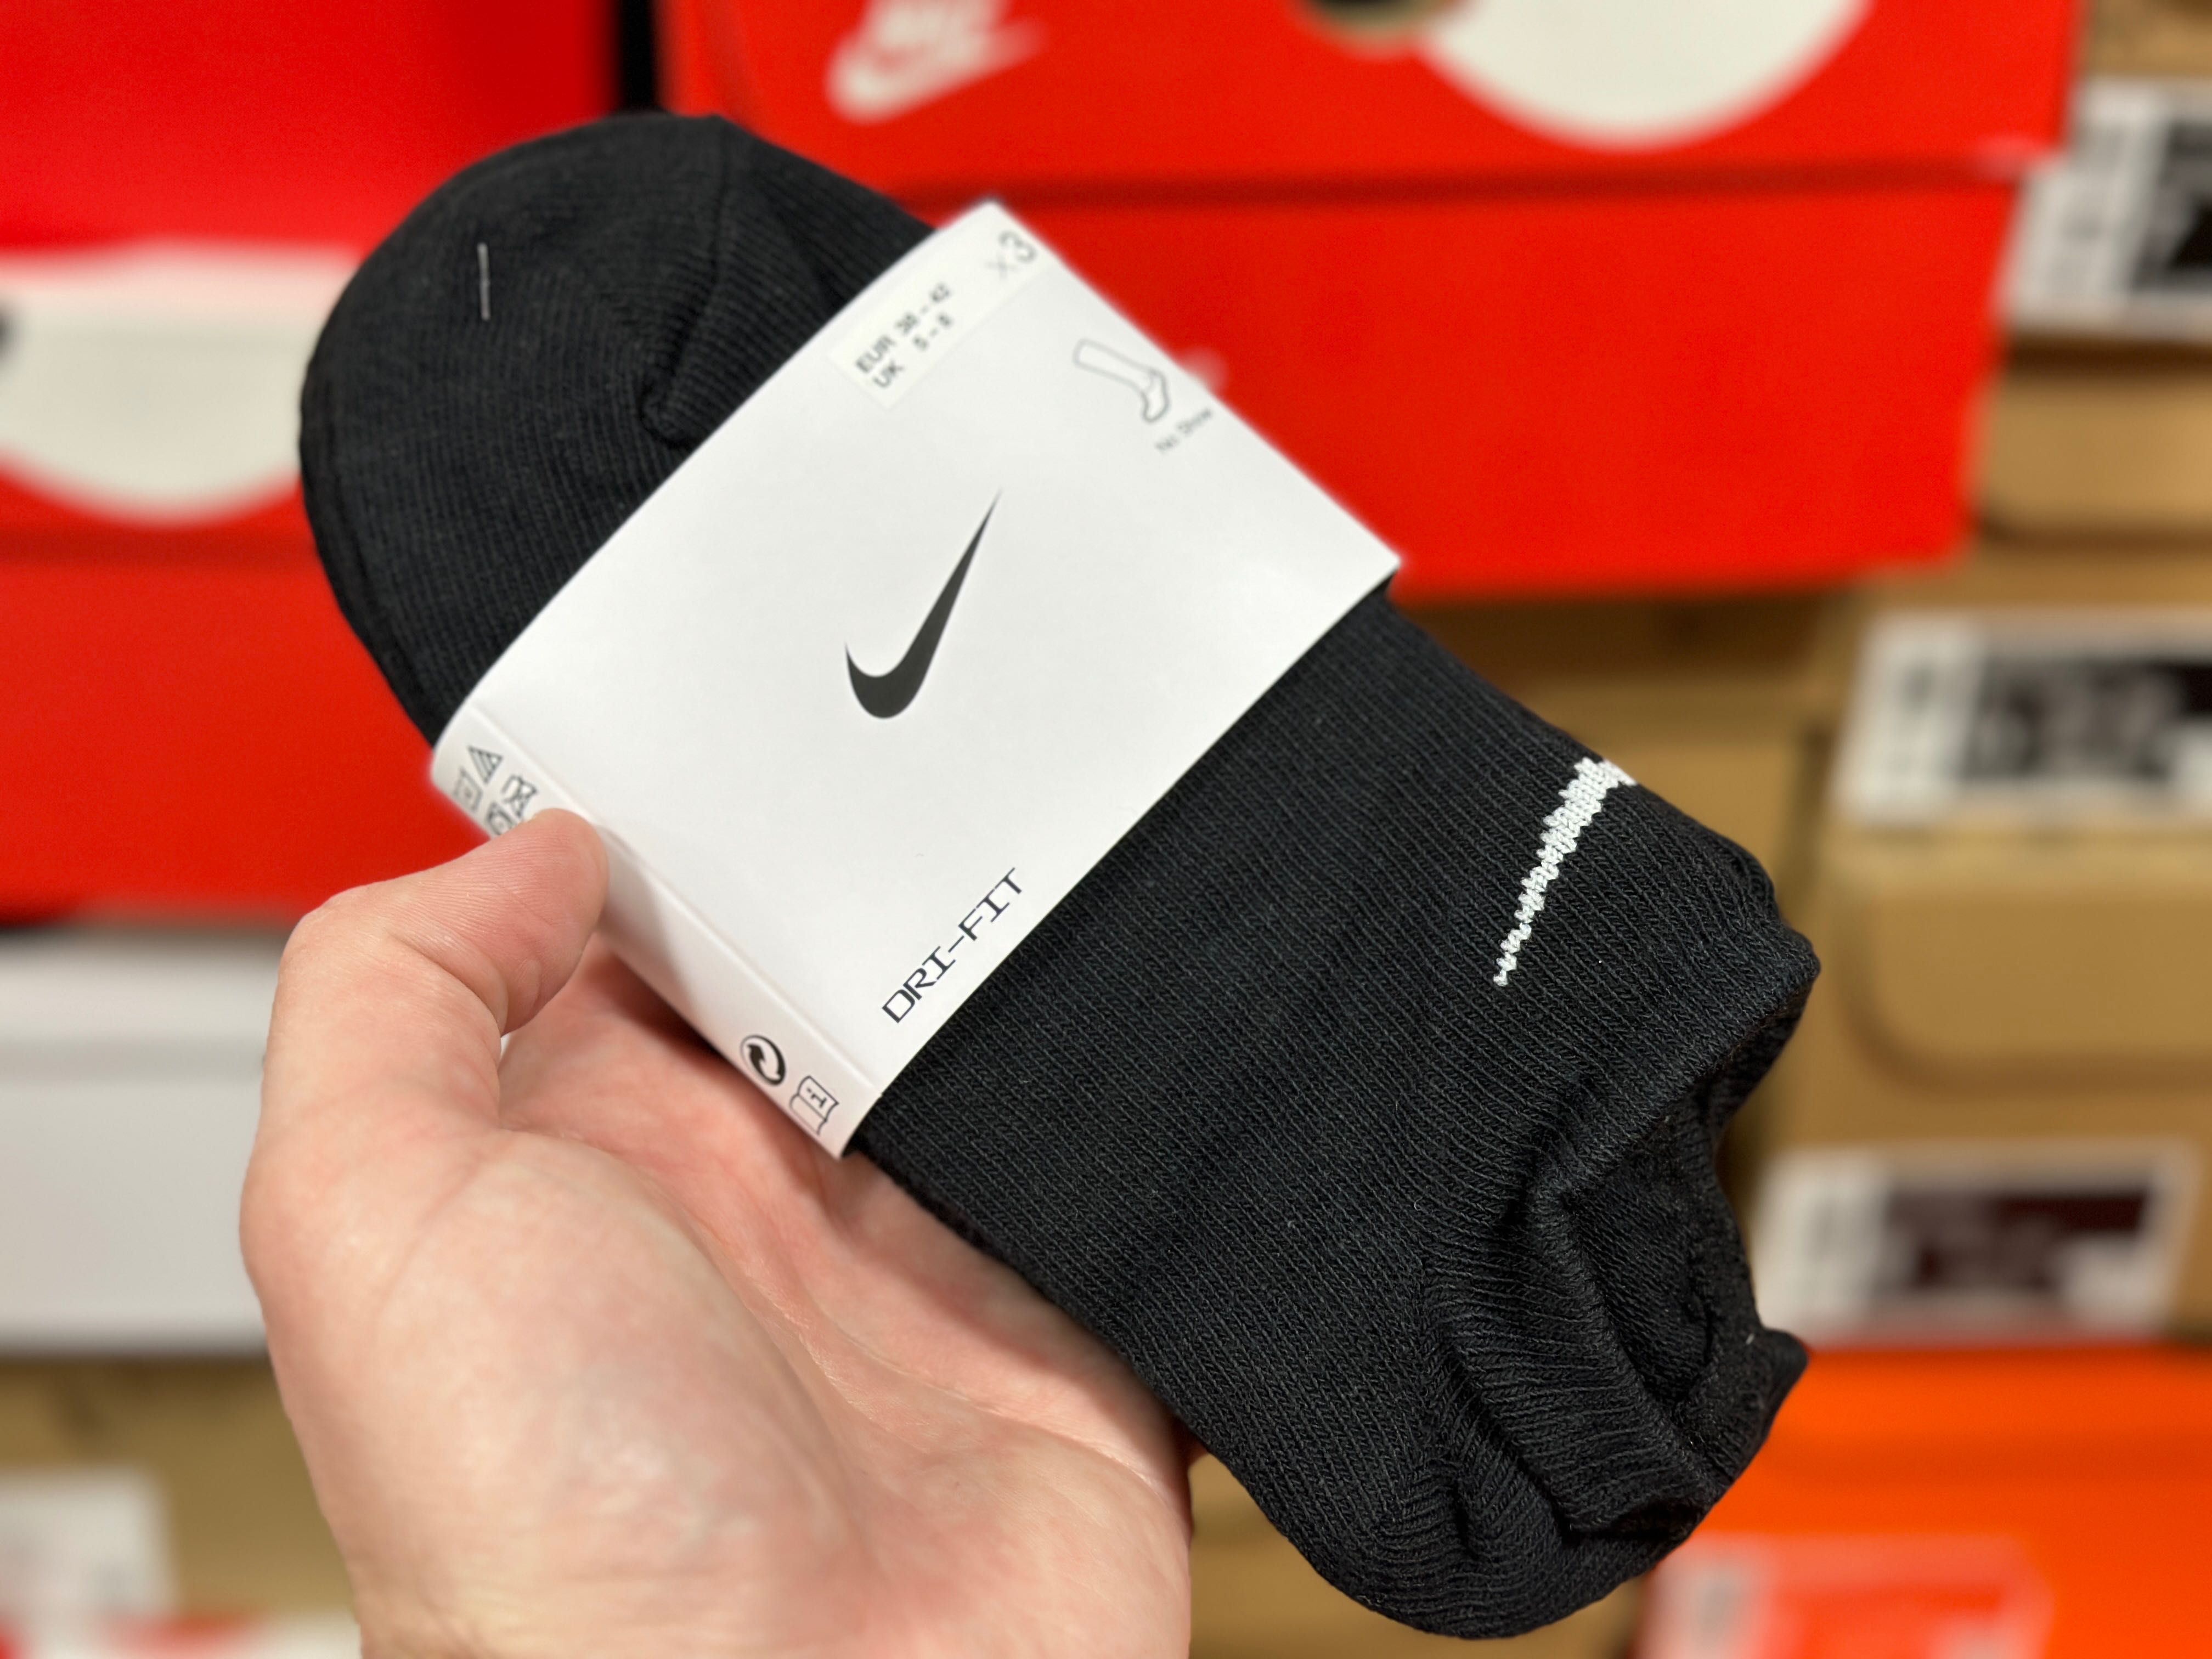 Шкарпетки Nike Lightweight No Show SX2554-001 носки черные 3 пары